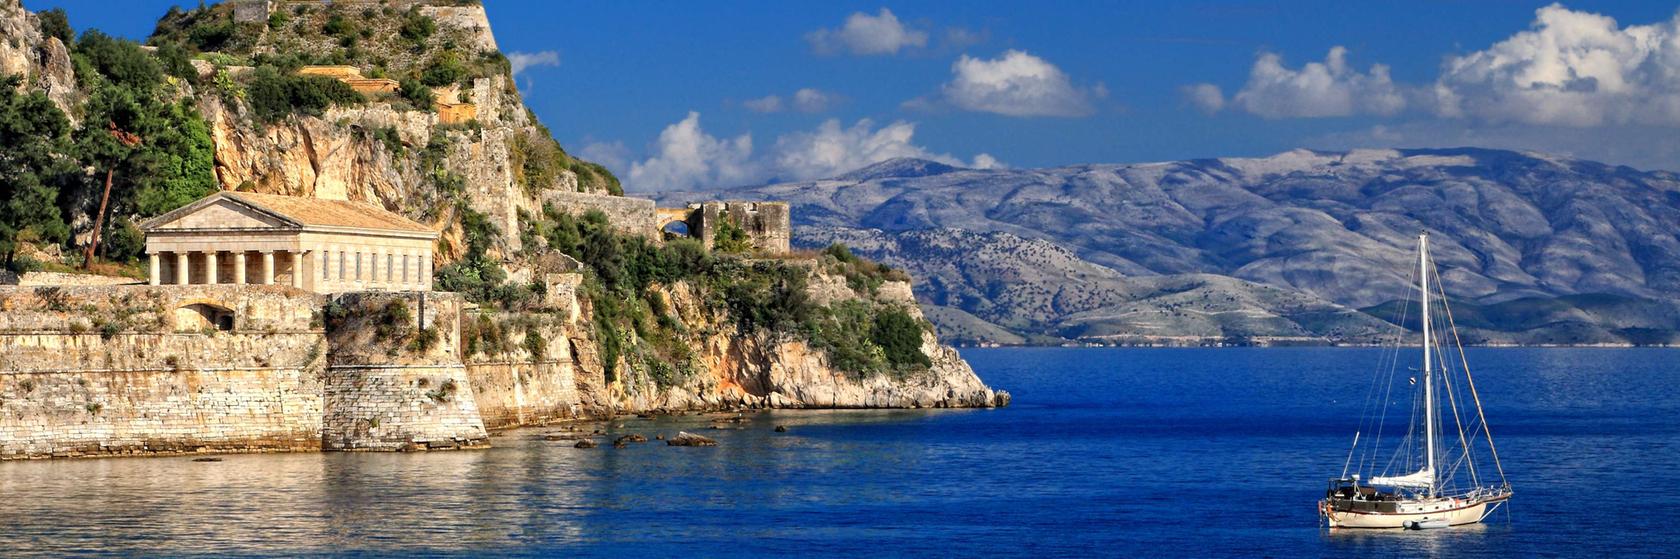 Praktické informace o Korfu